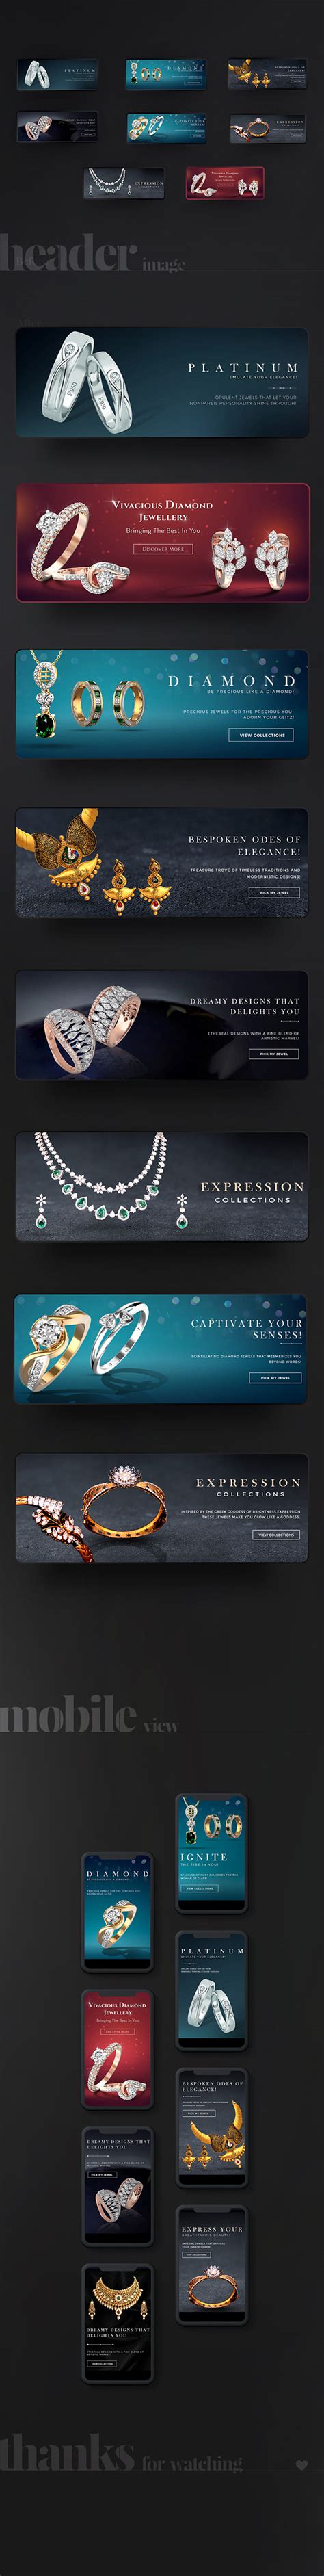 Jewellery Store Website Header Images On Behance